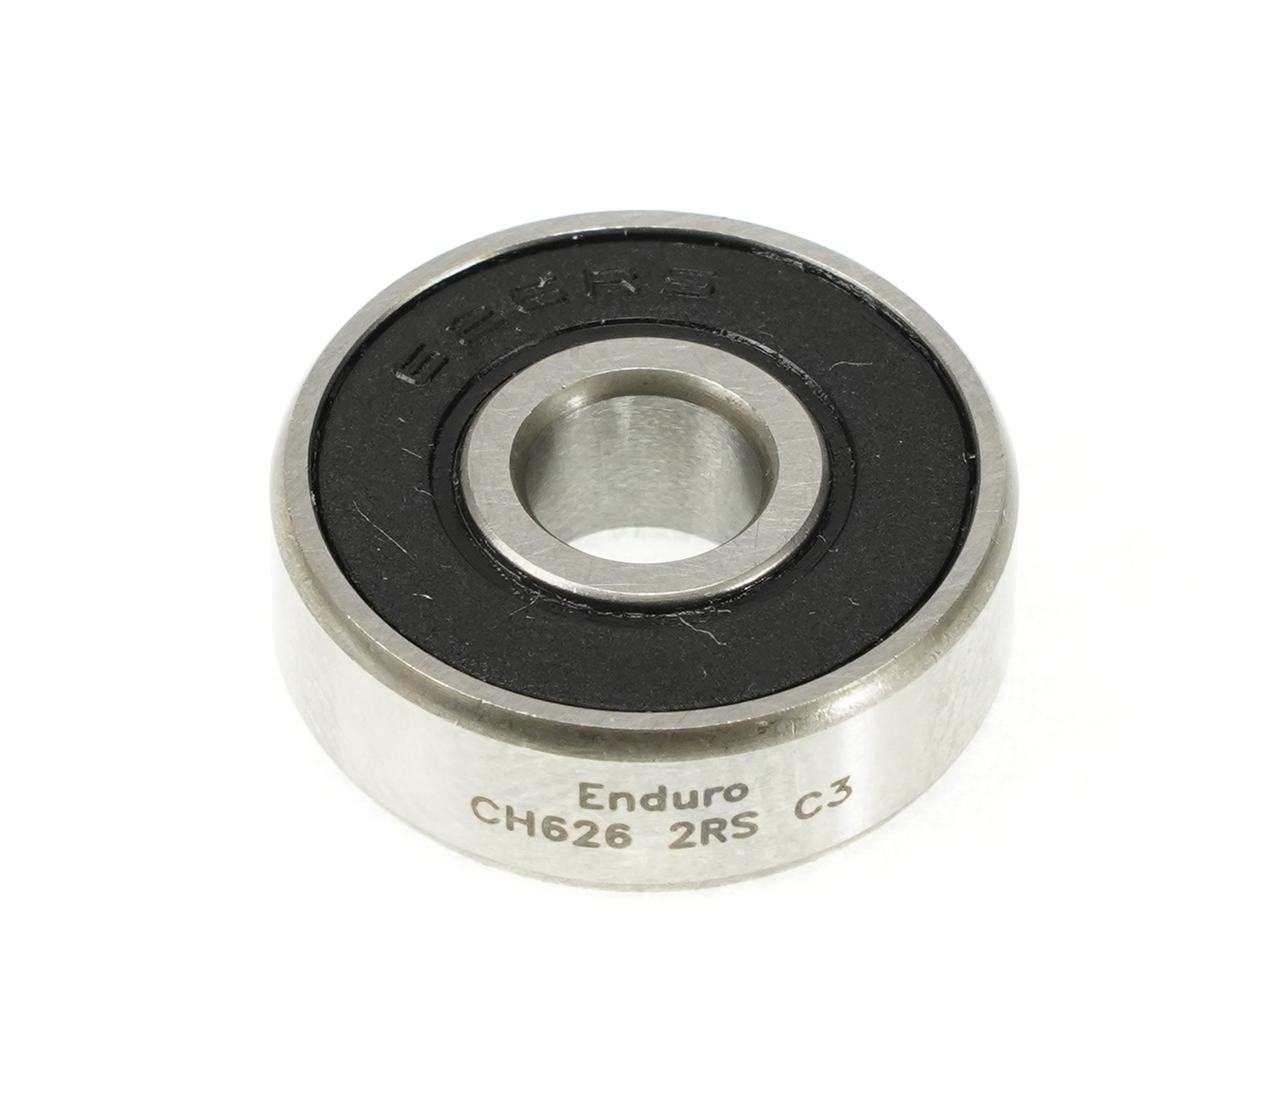 Enduro CH 626 2RS - Ceramic-Hybrid, ABEC-5 Radial Bearing (C3 Clearance) - 6mm x 19mm x 6mm